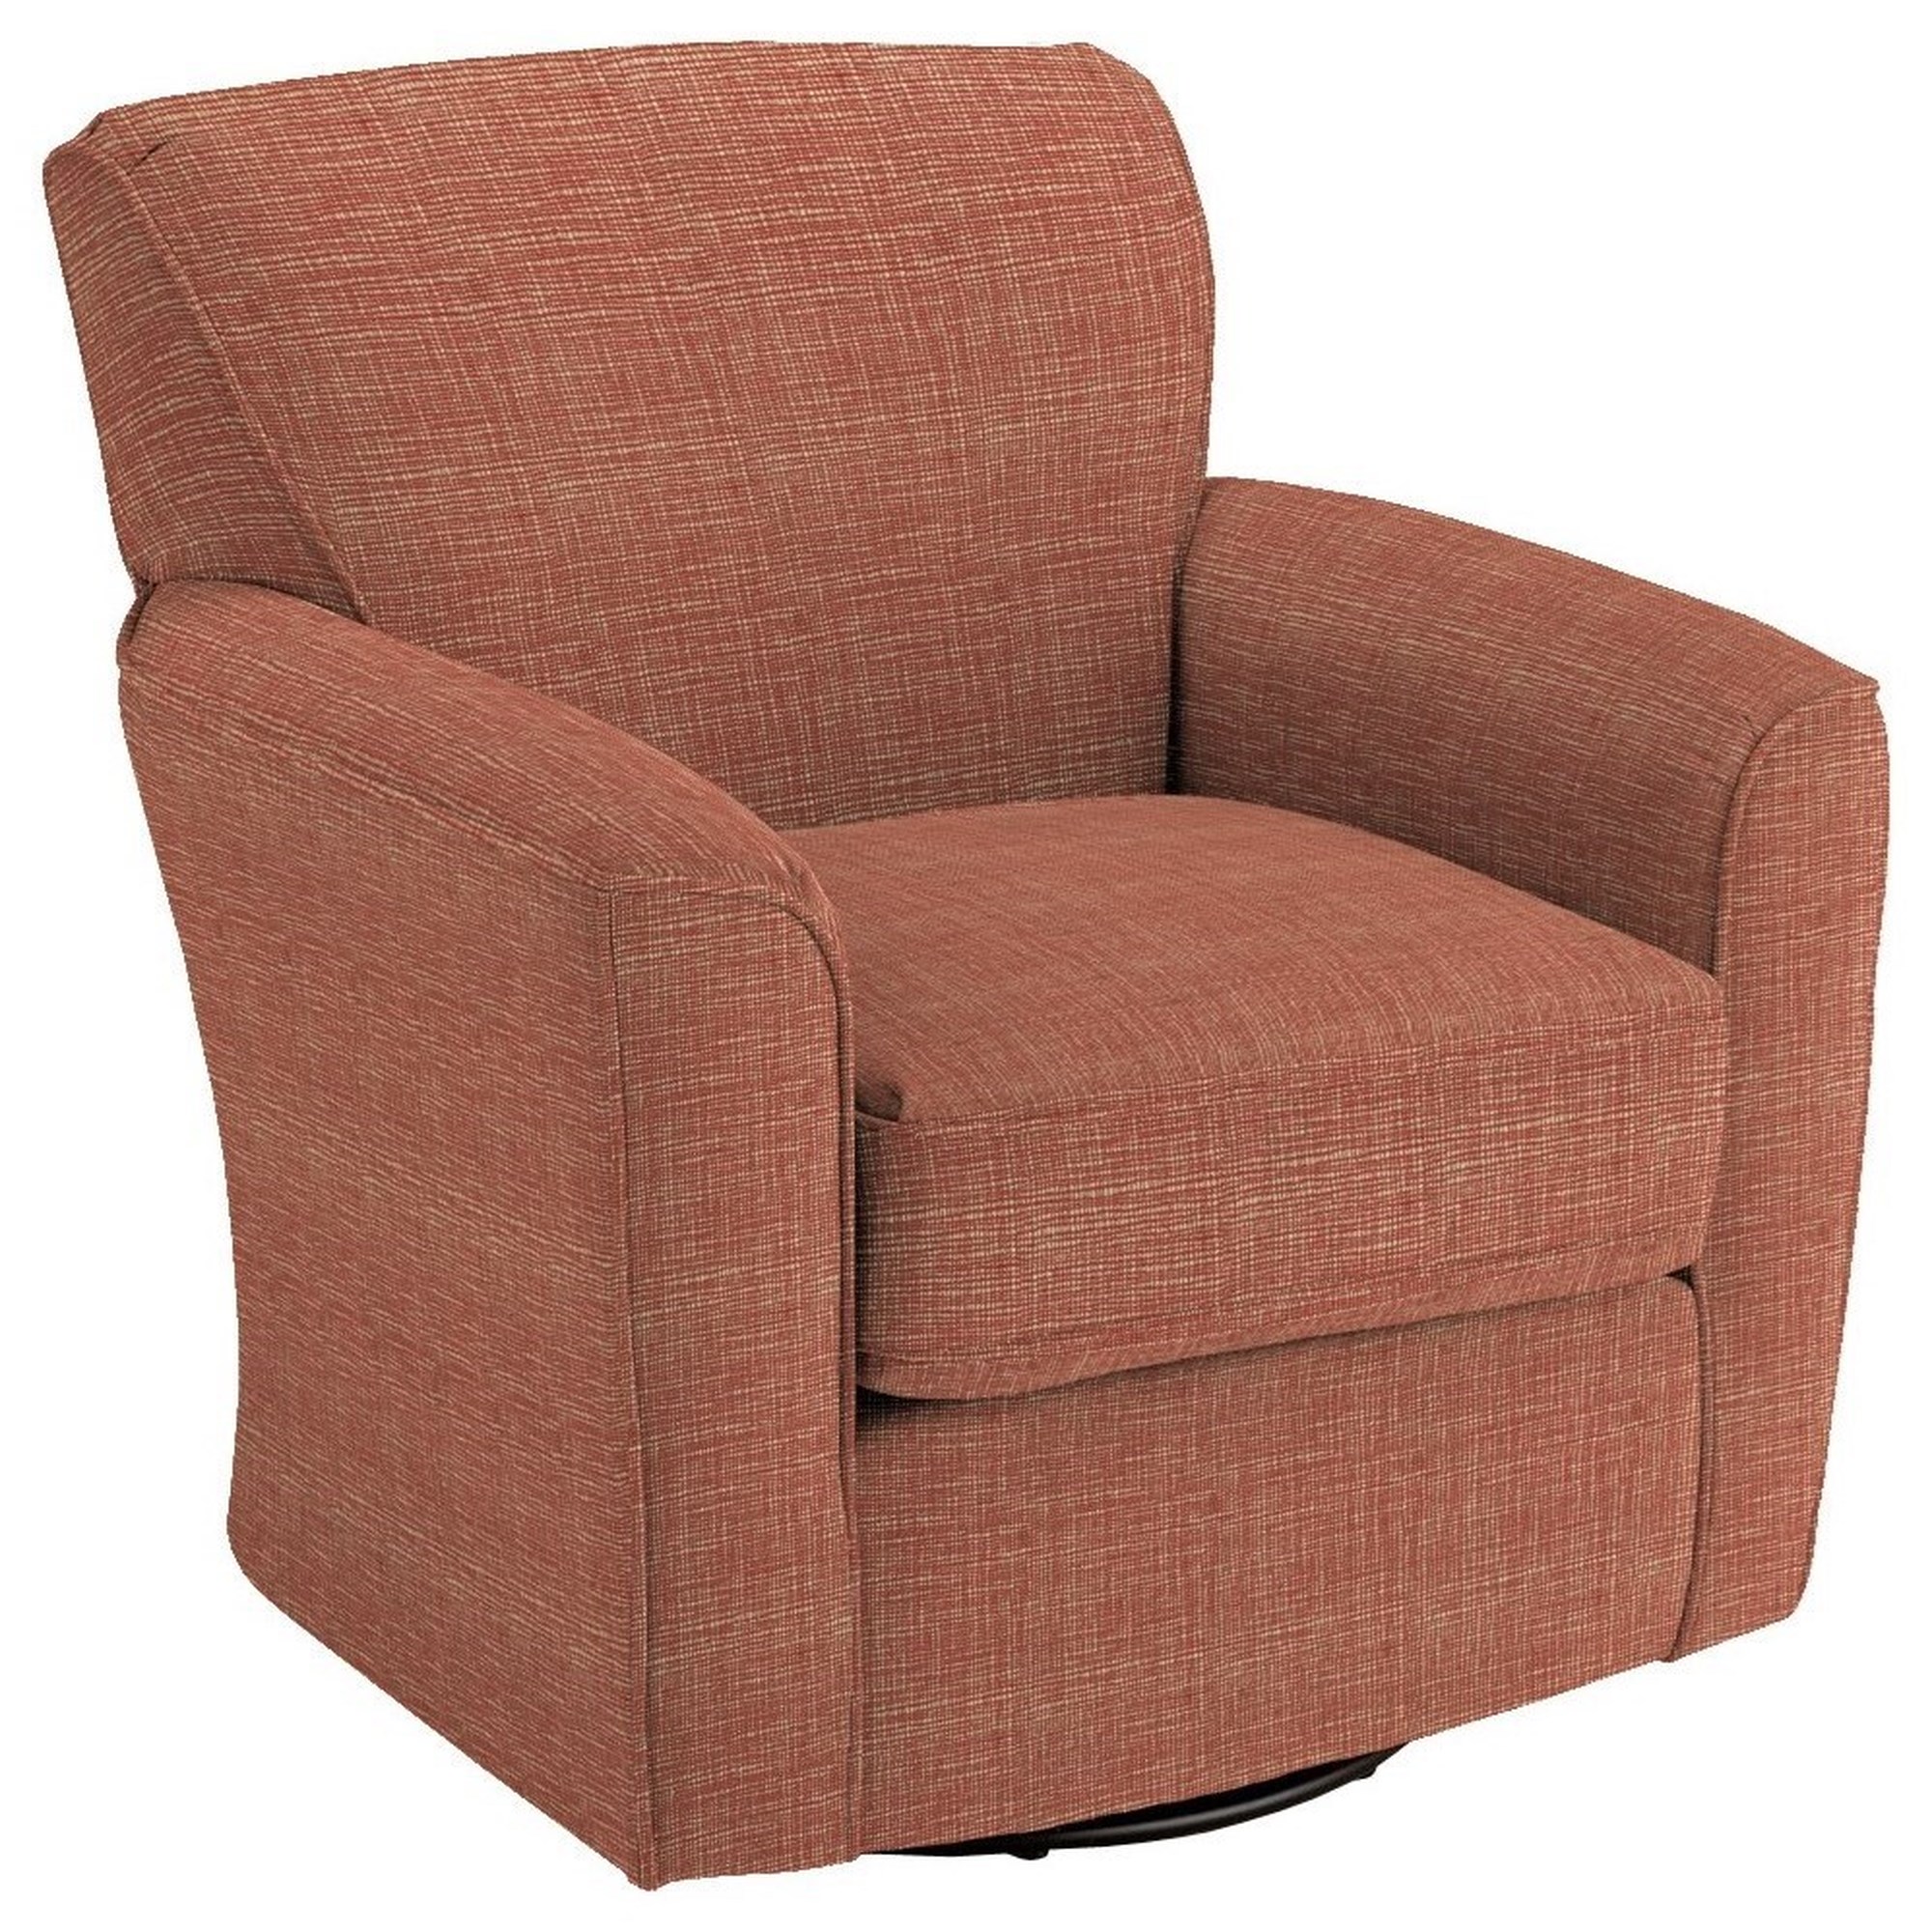 Best Home Furnishings Swivel Barrel Chairs 2888 Kaylee Swivel